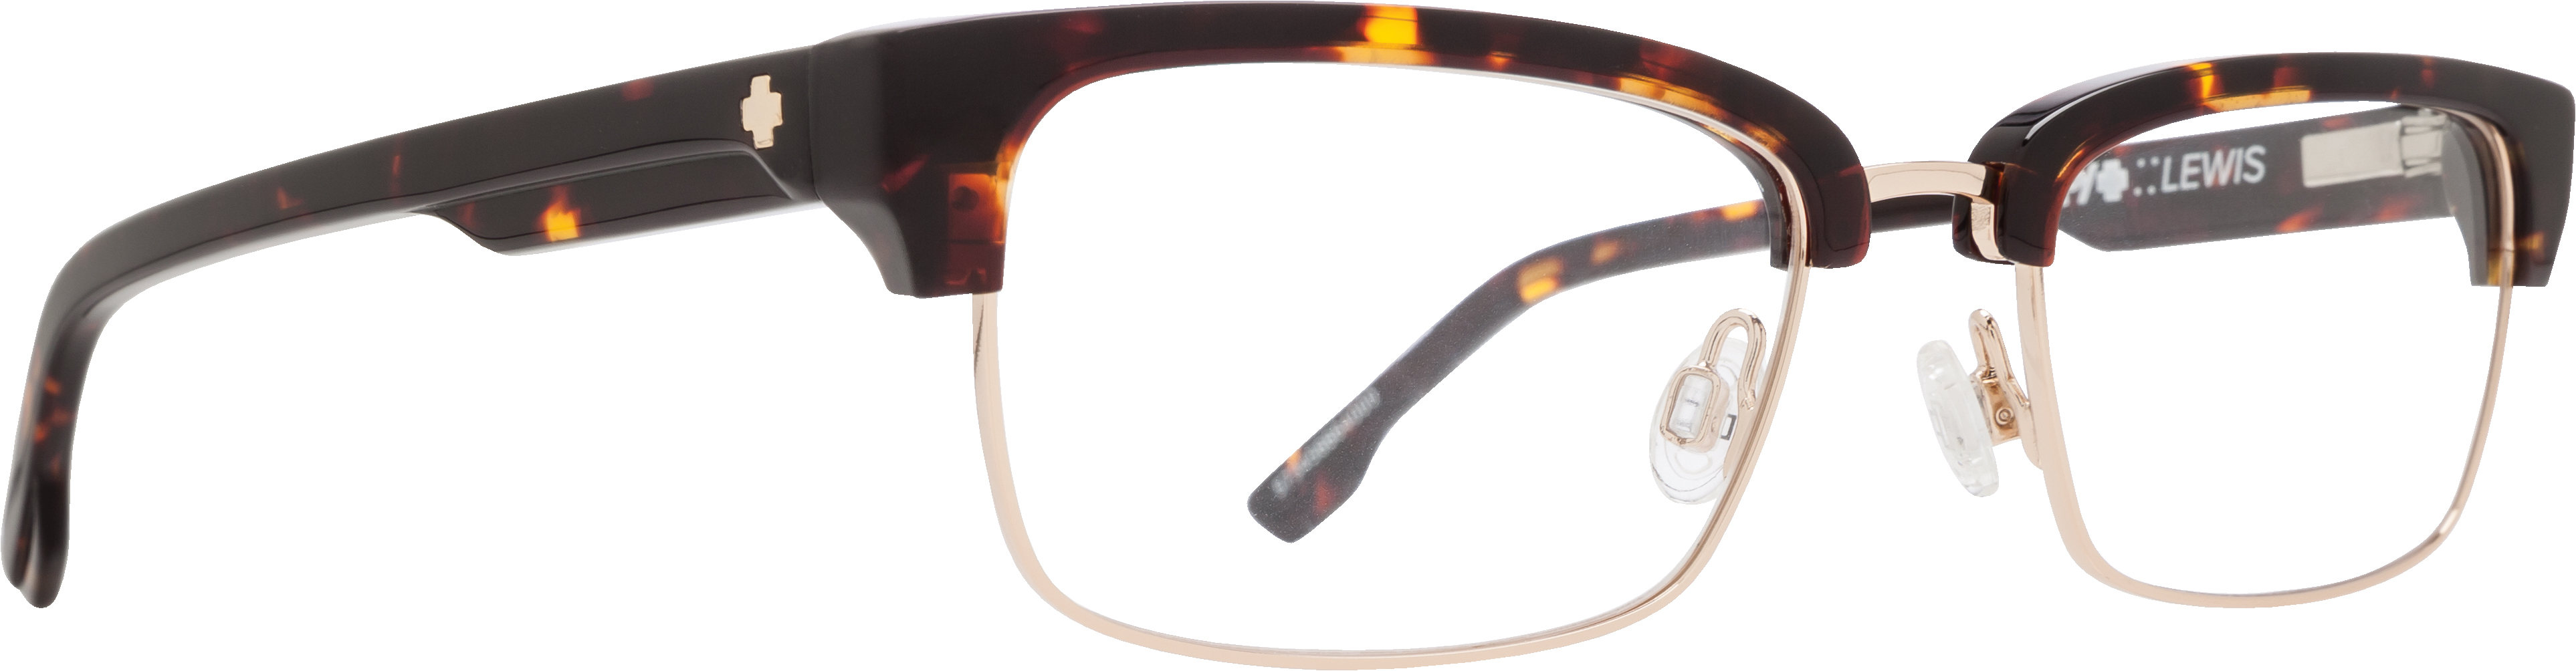 Picture of Spy Eyeglasses LEWIS